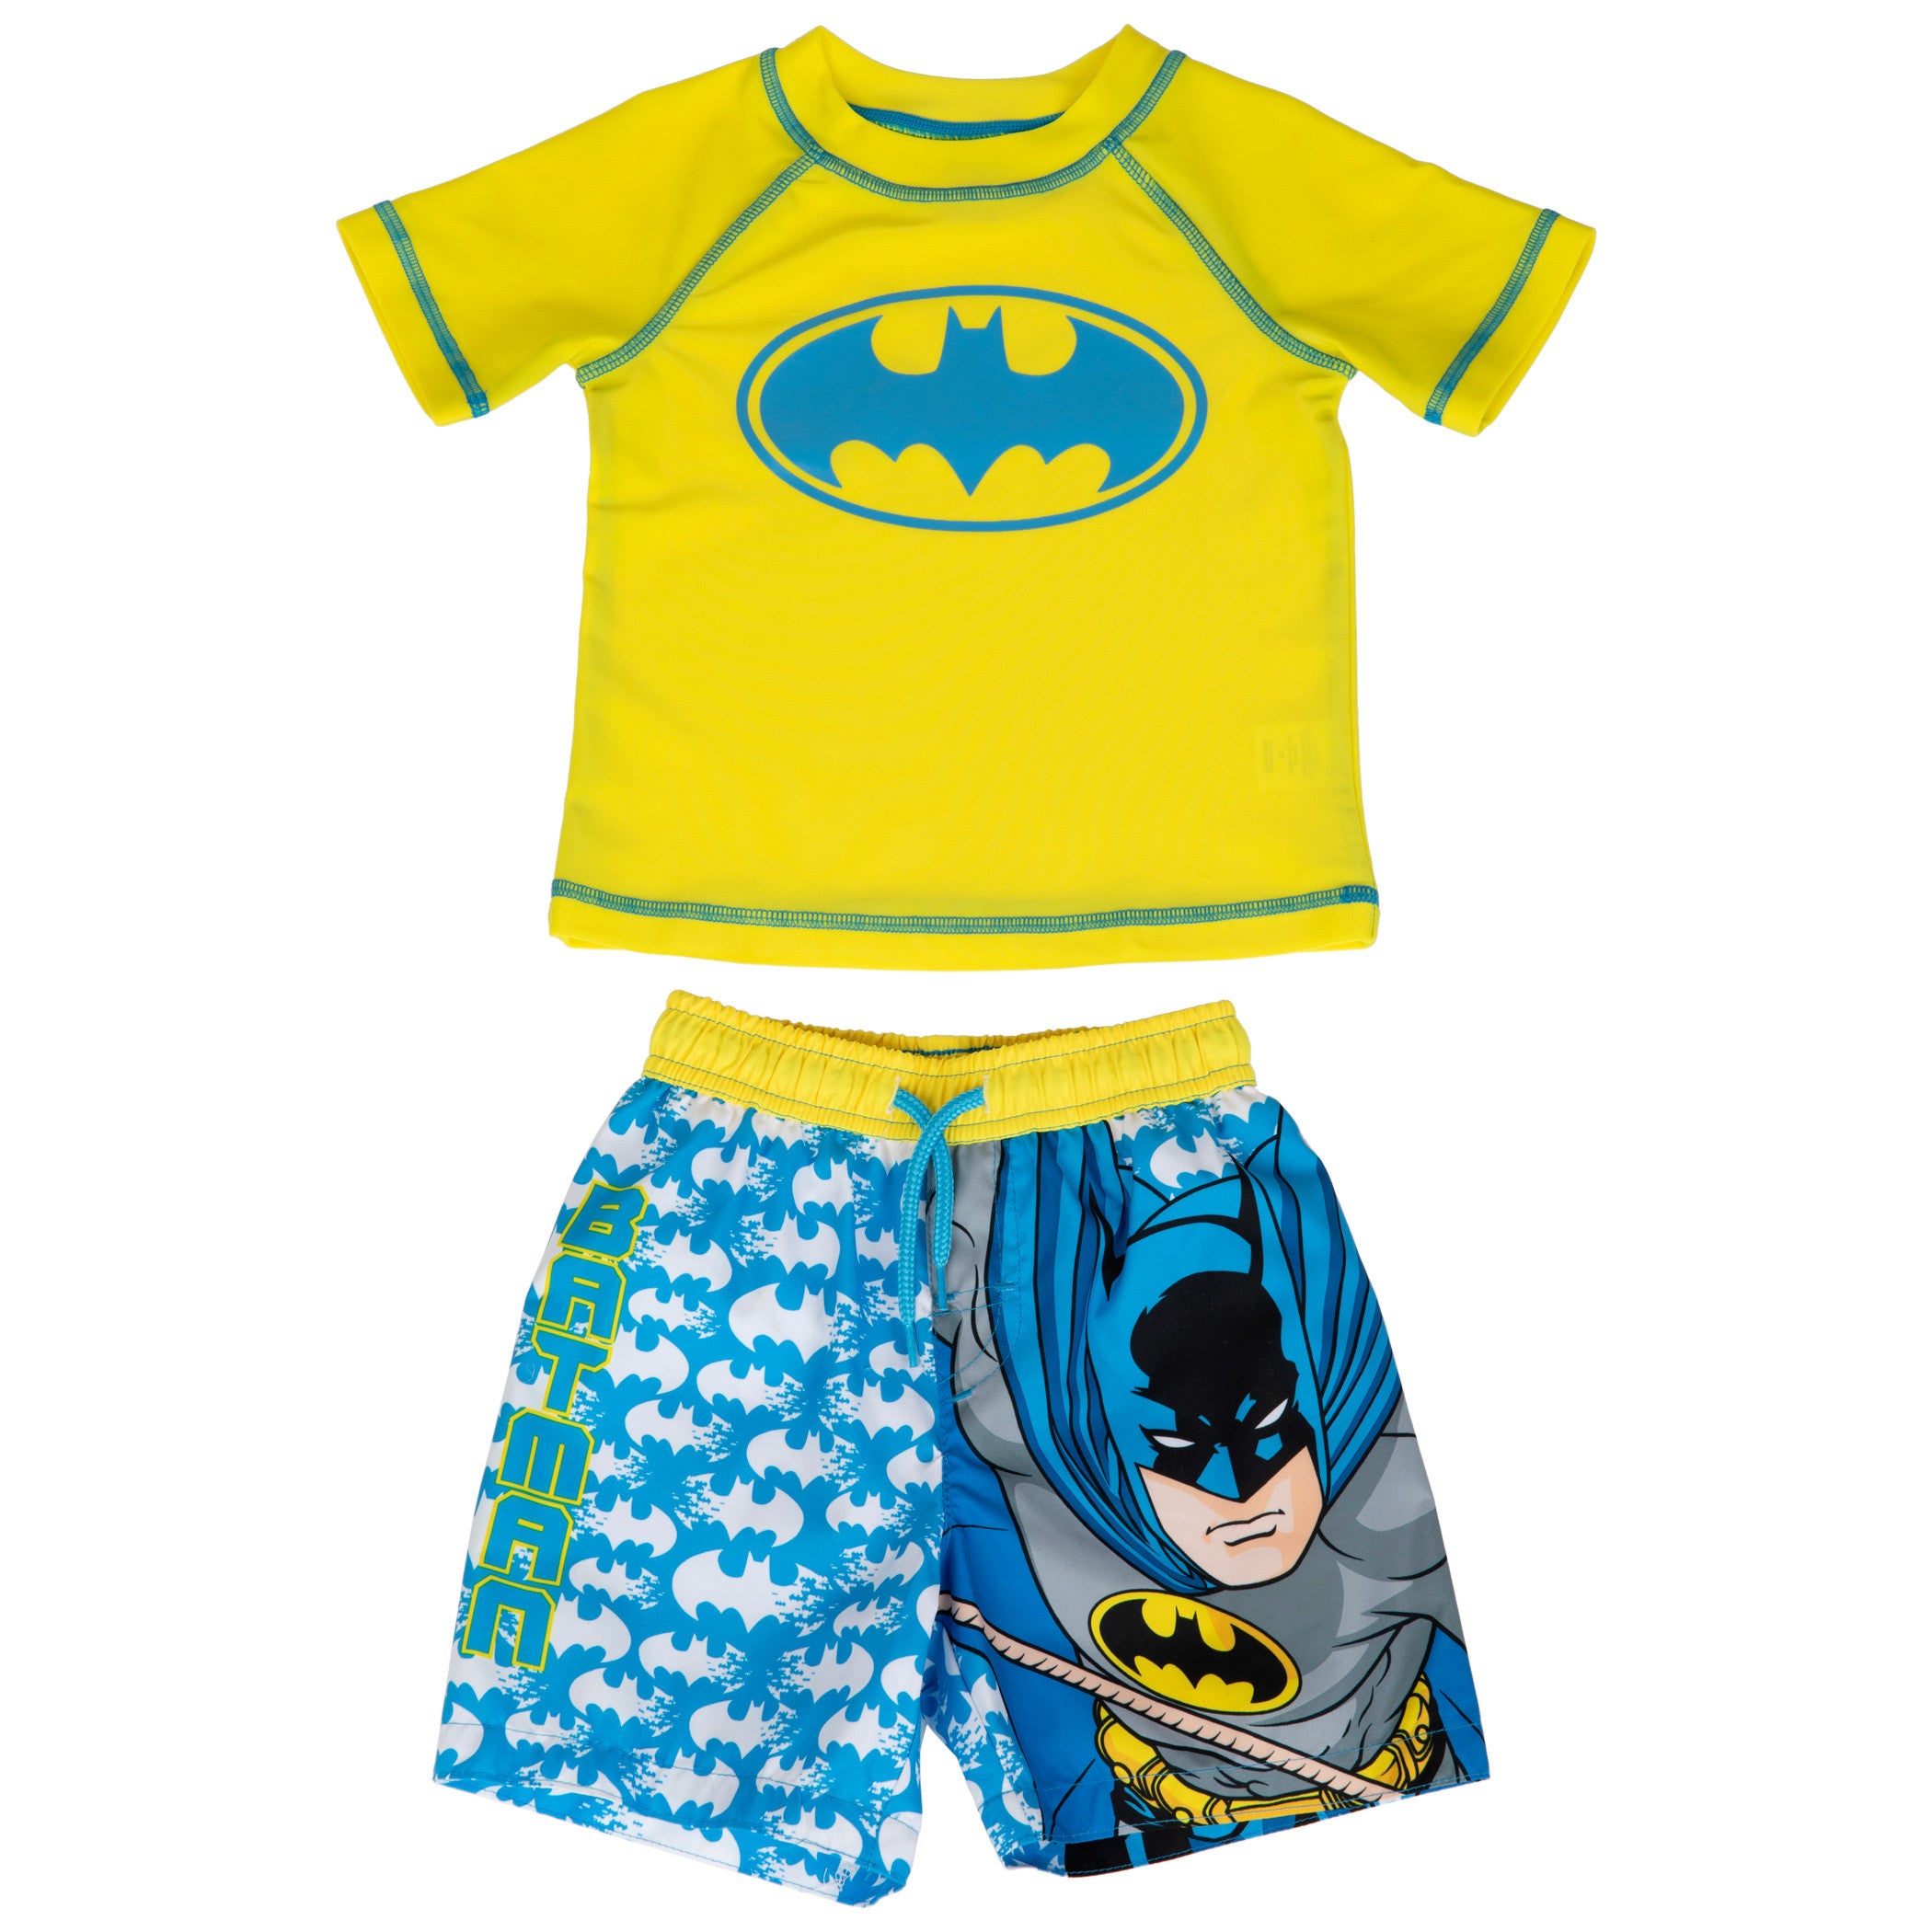 Batman The Dark Knight Toddler Swim Trunks and Rashguard Set